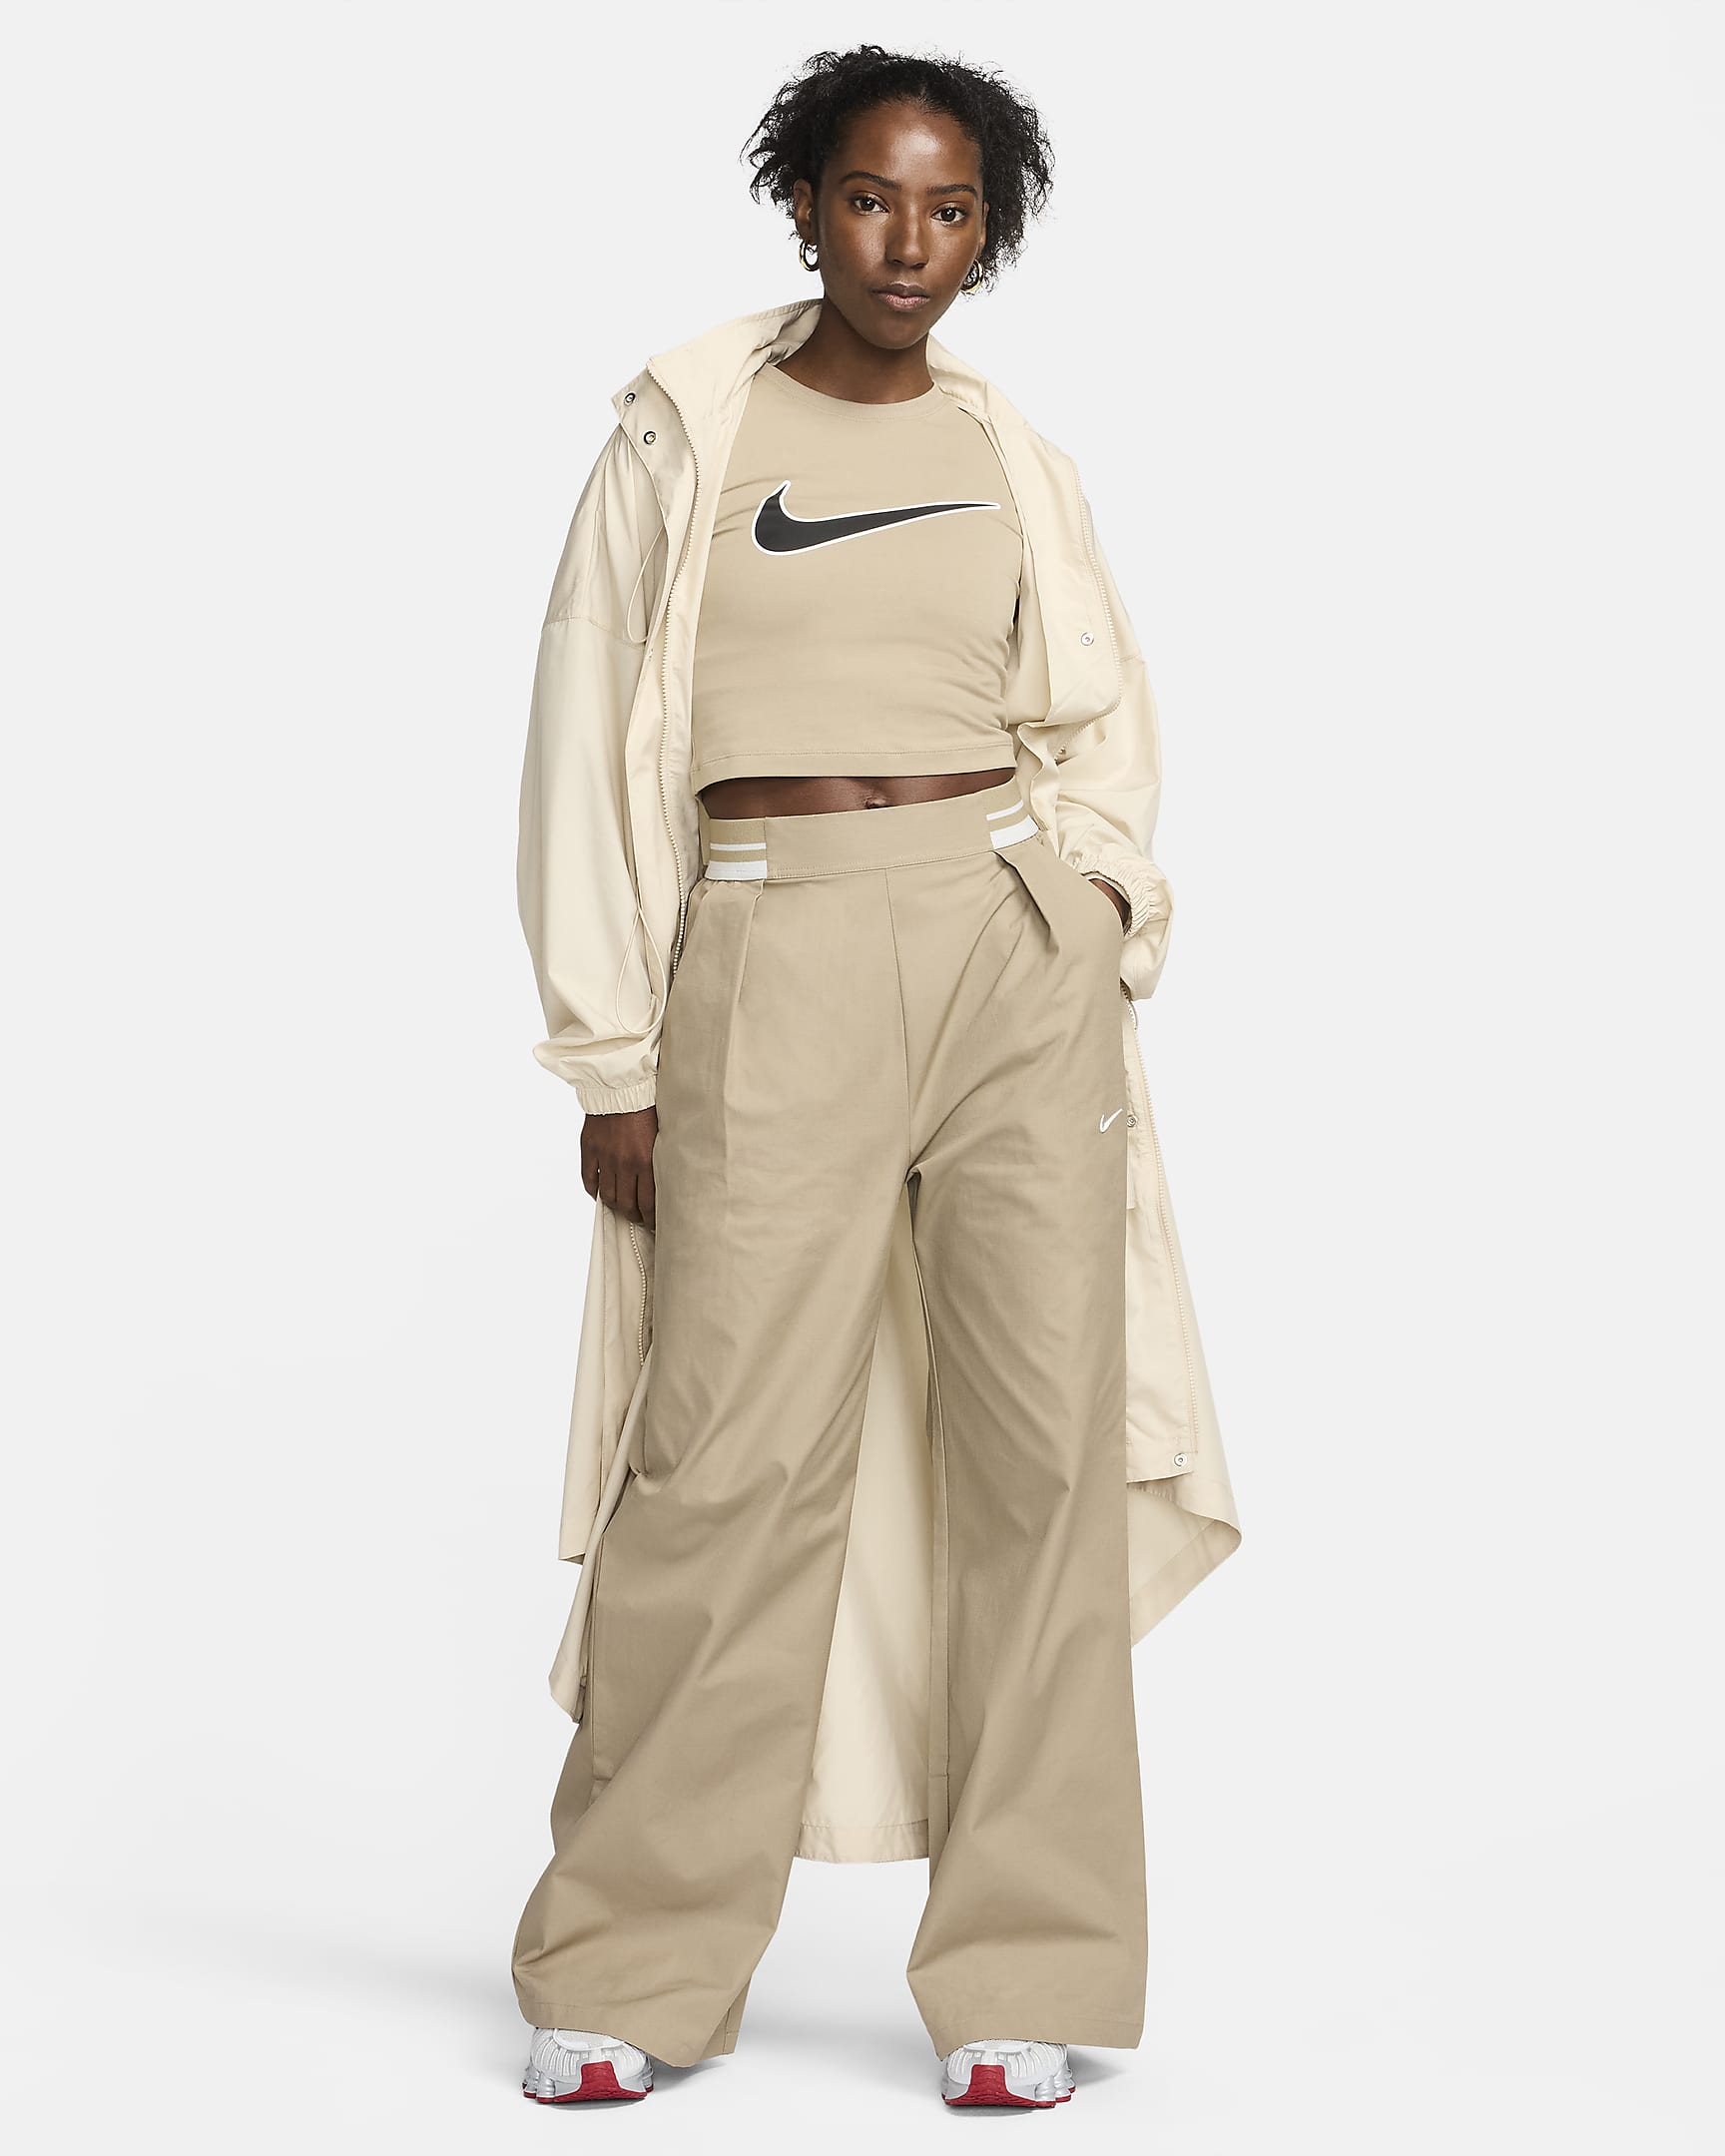 Nike Sportswear Collection Women's High-Waisted Pants - Khaki/Sail